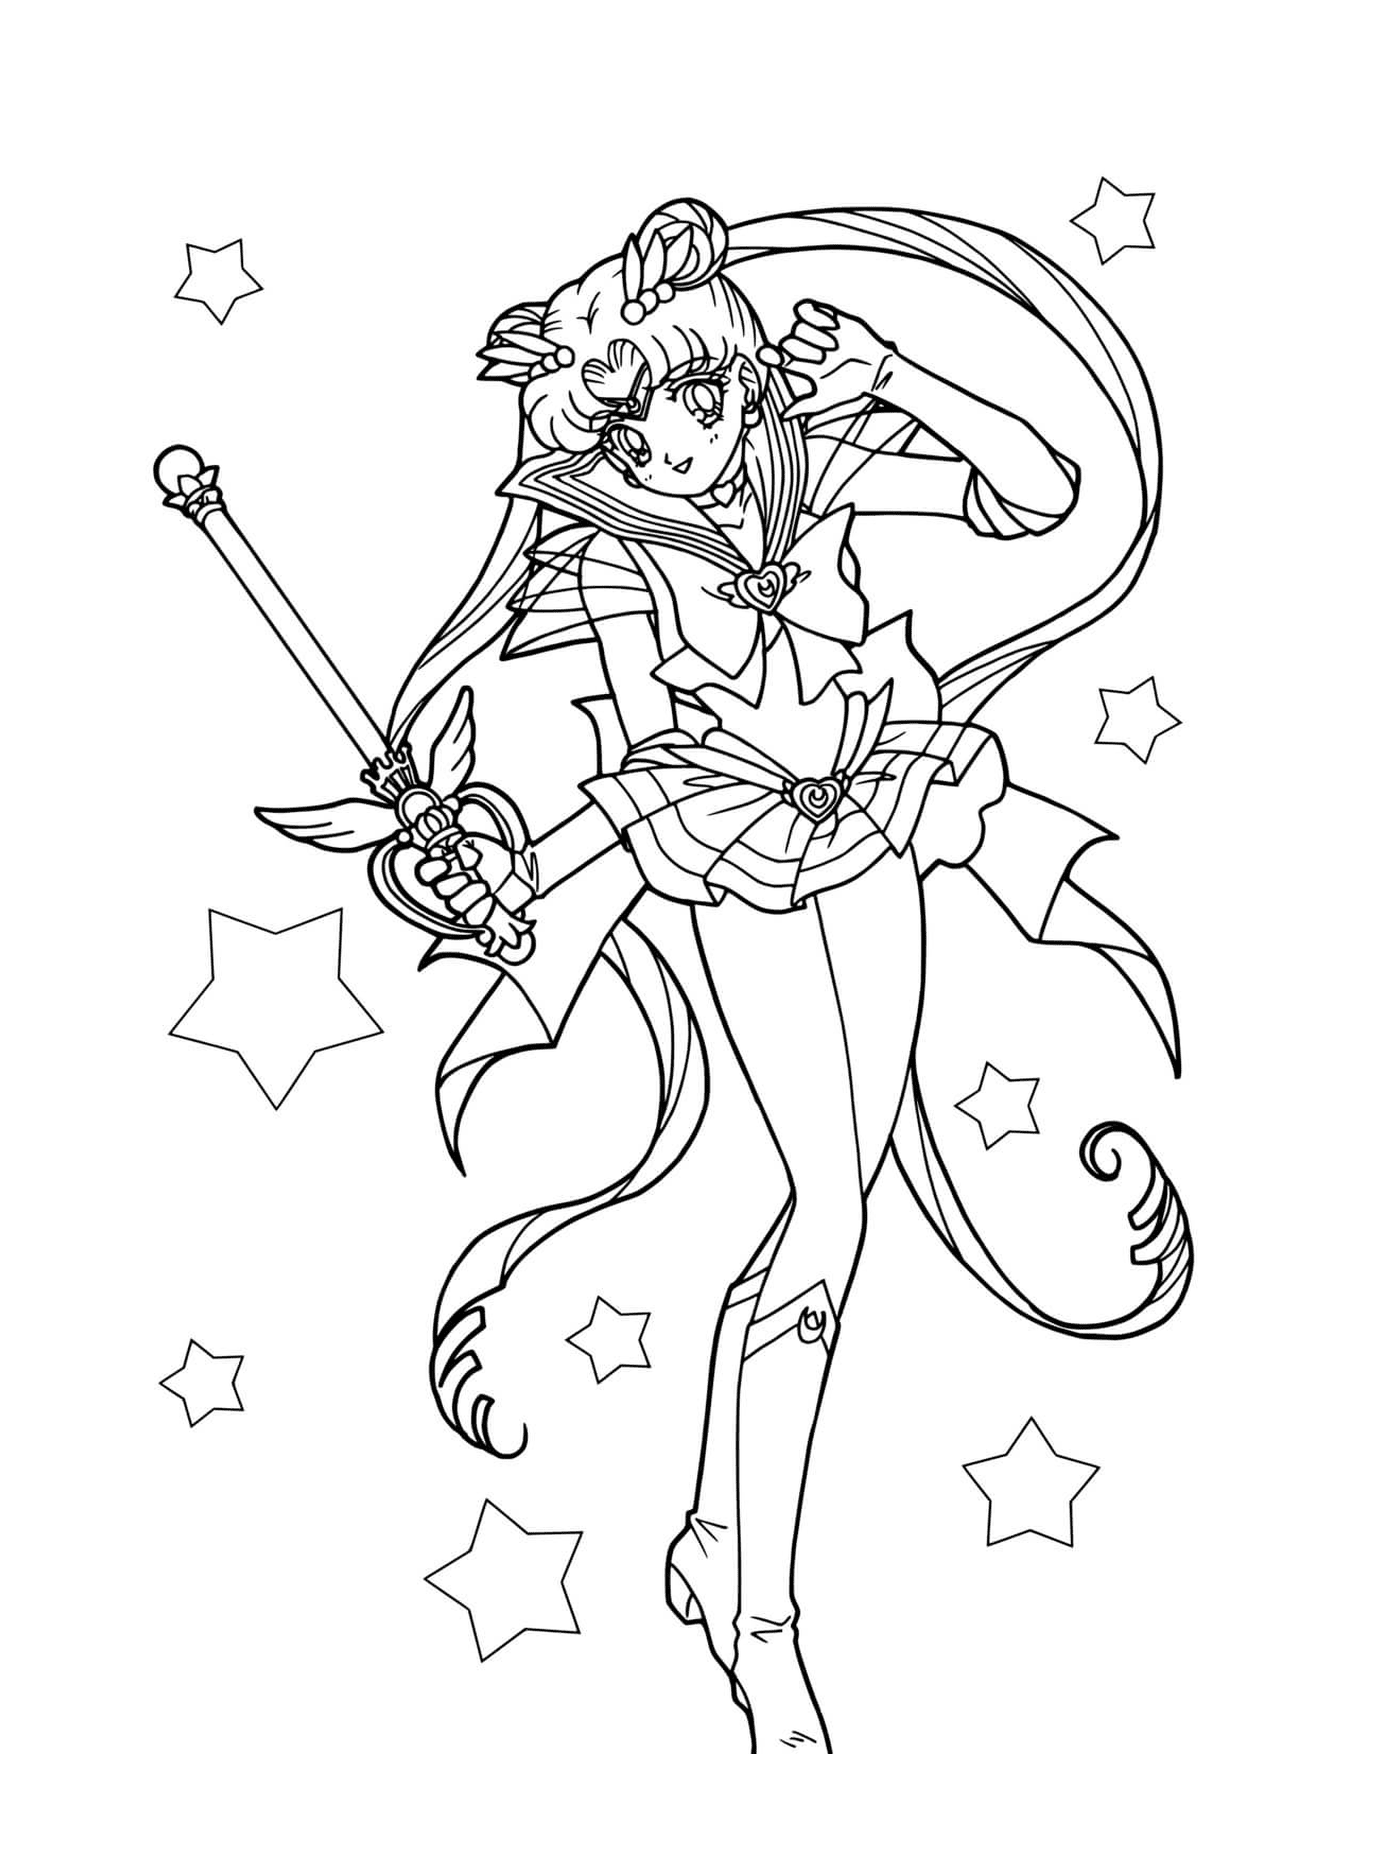  Character of Sailor Moon 